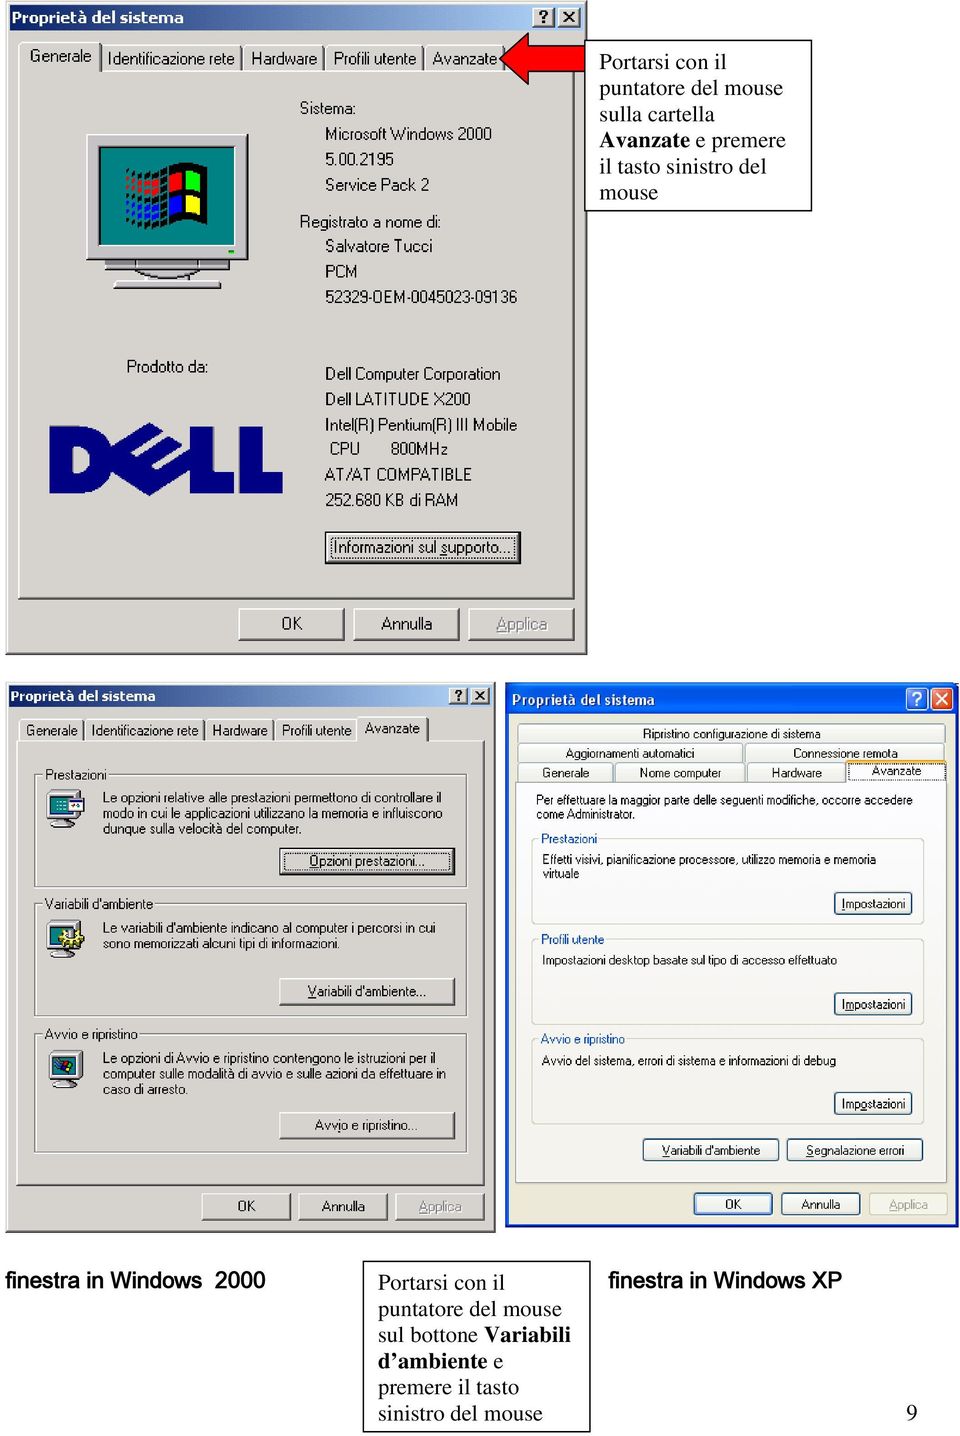 Windows 2000 sul bottone Variabili d